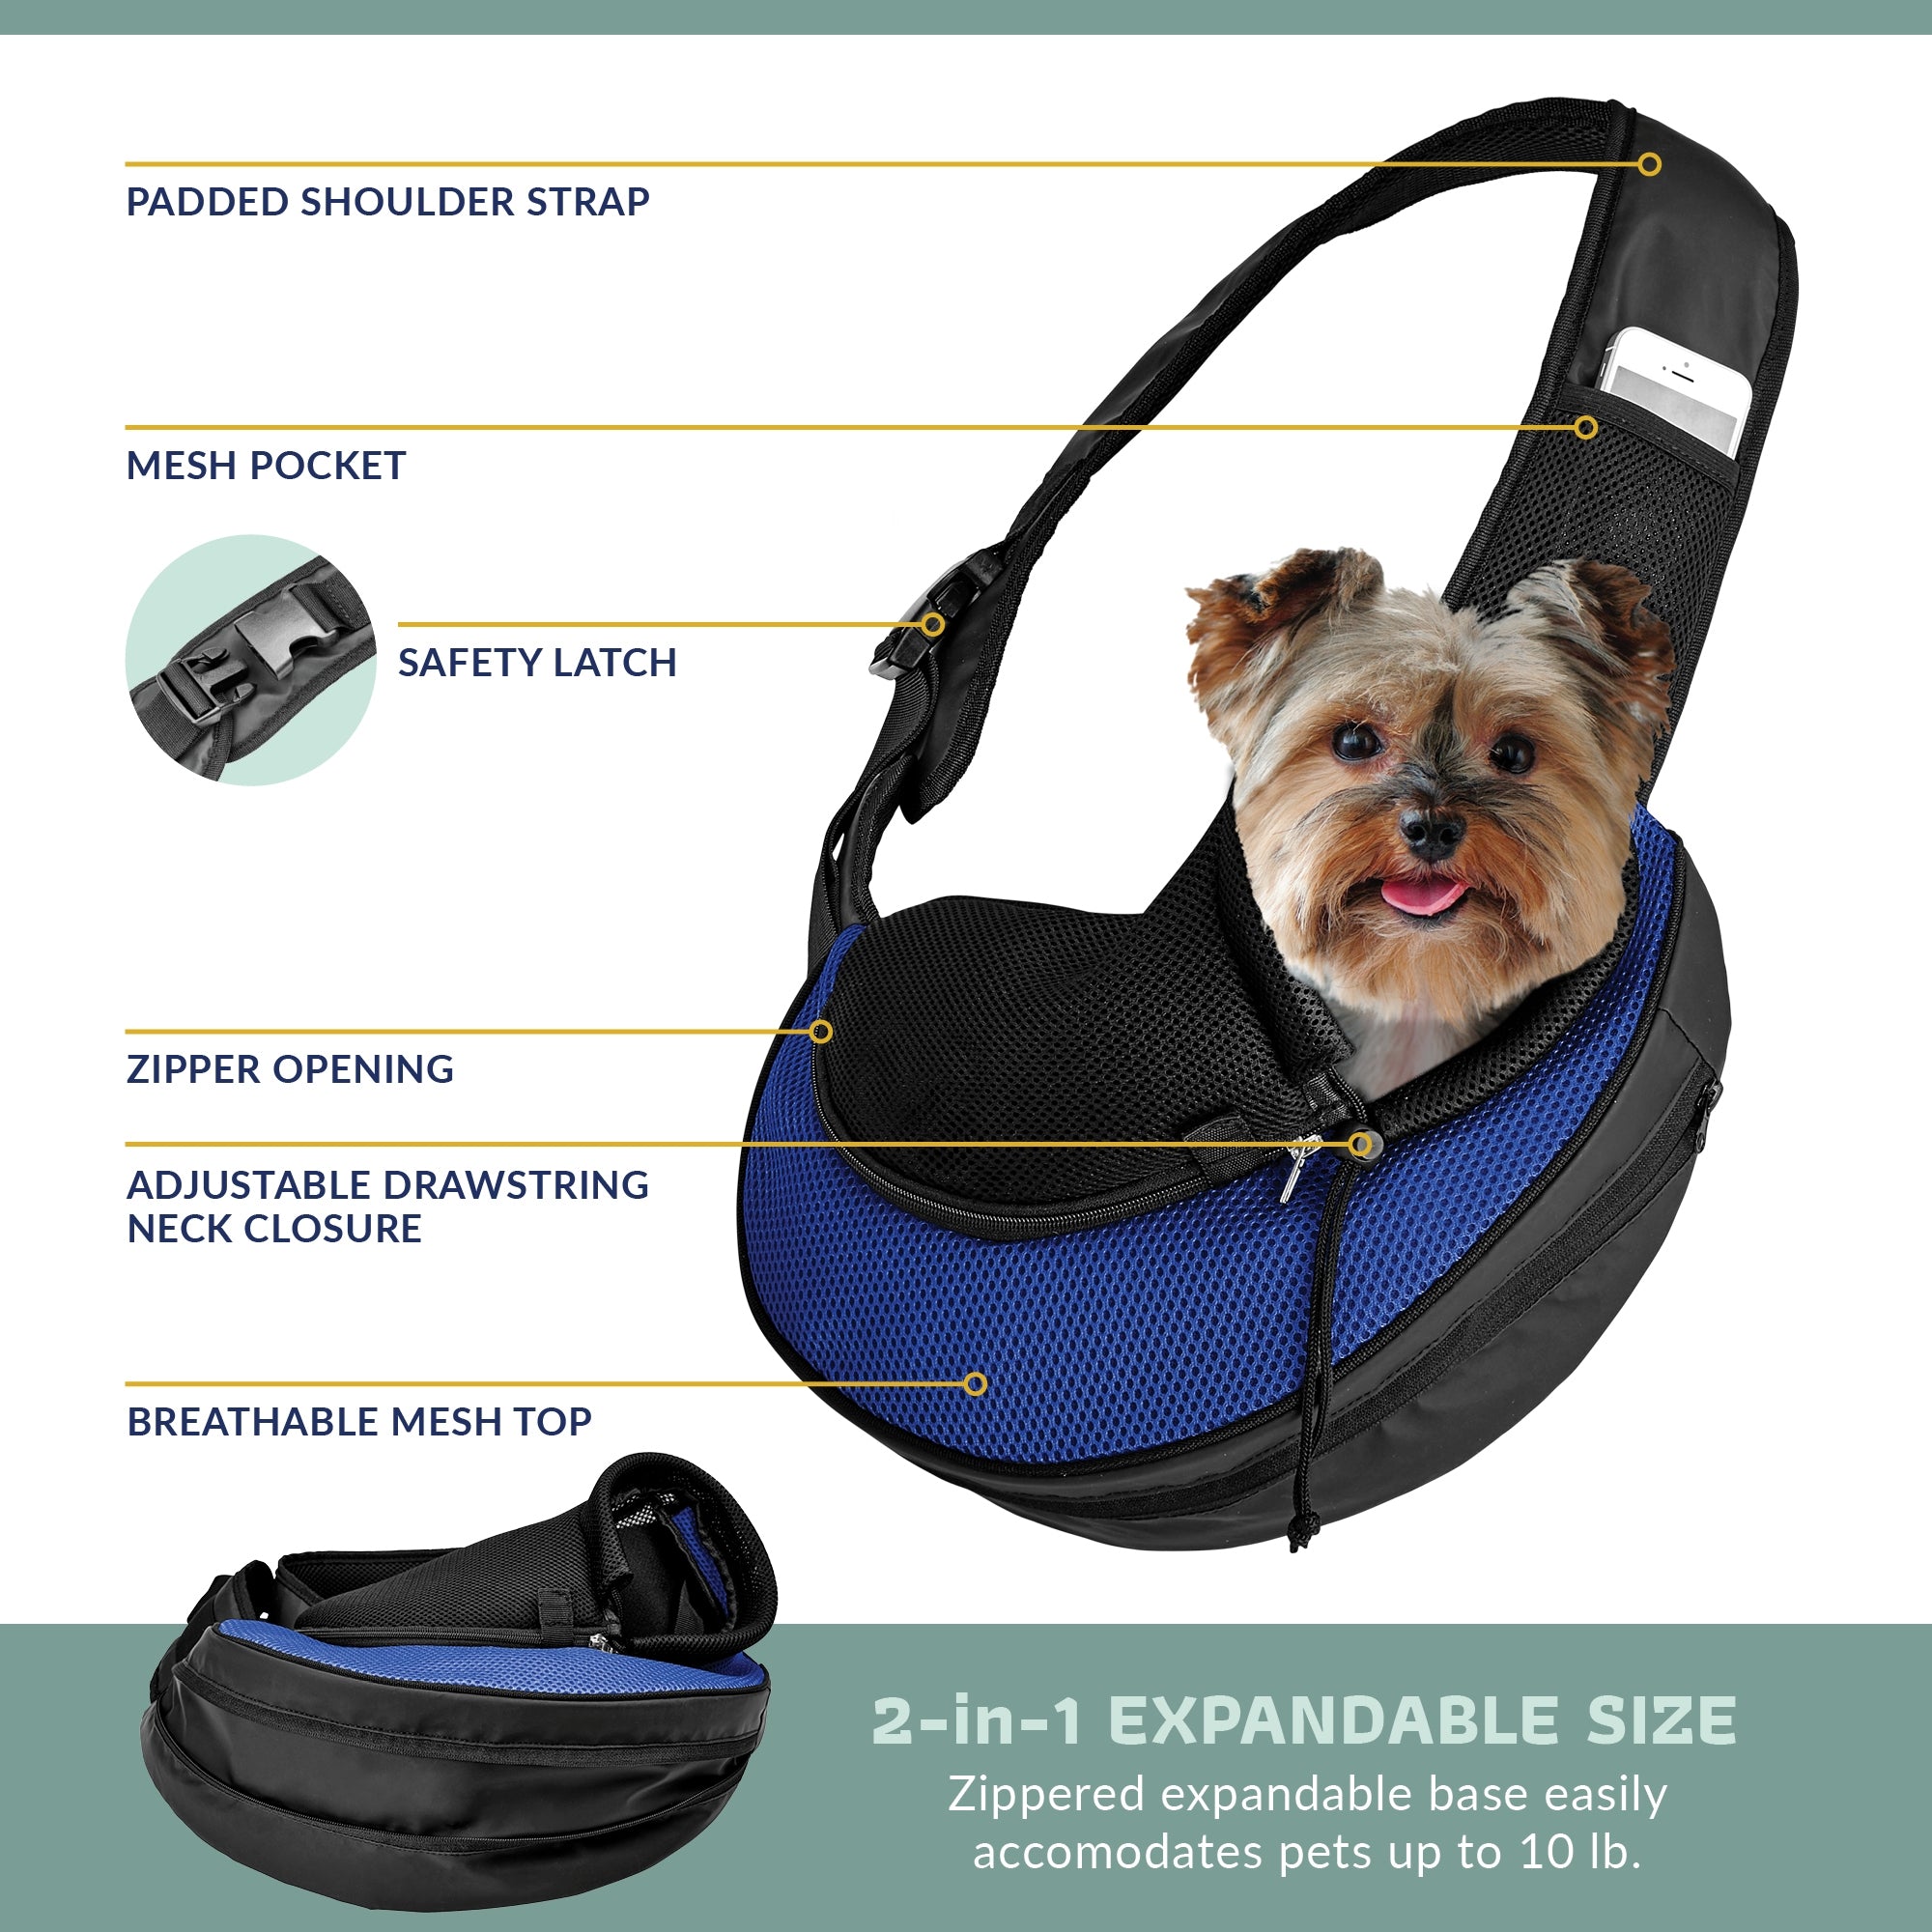 Katziela Expandable Sling Dog &amp; Cat Carrier - Blue